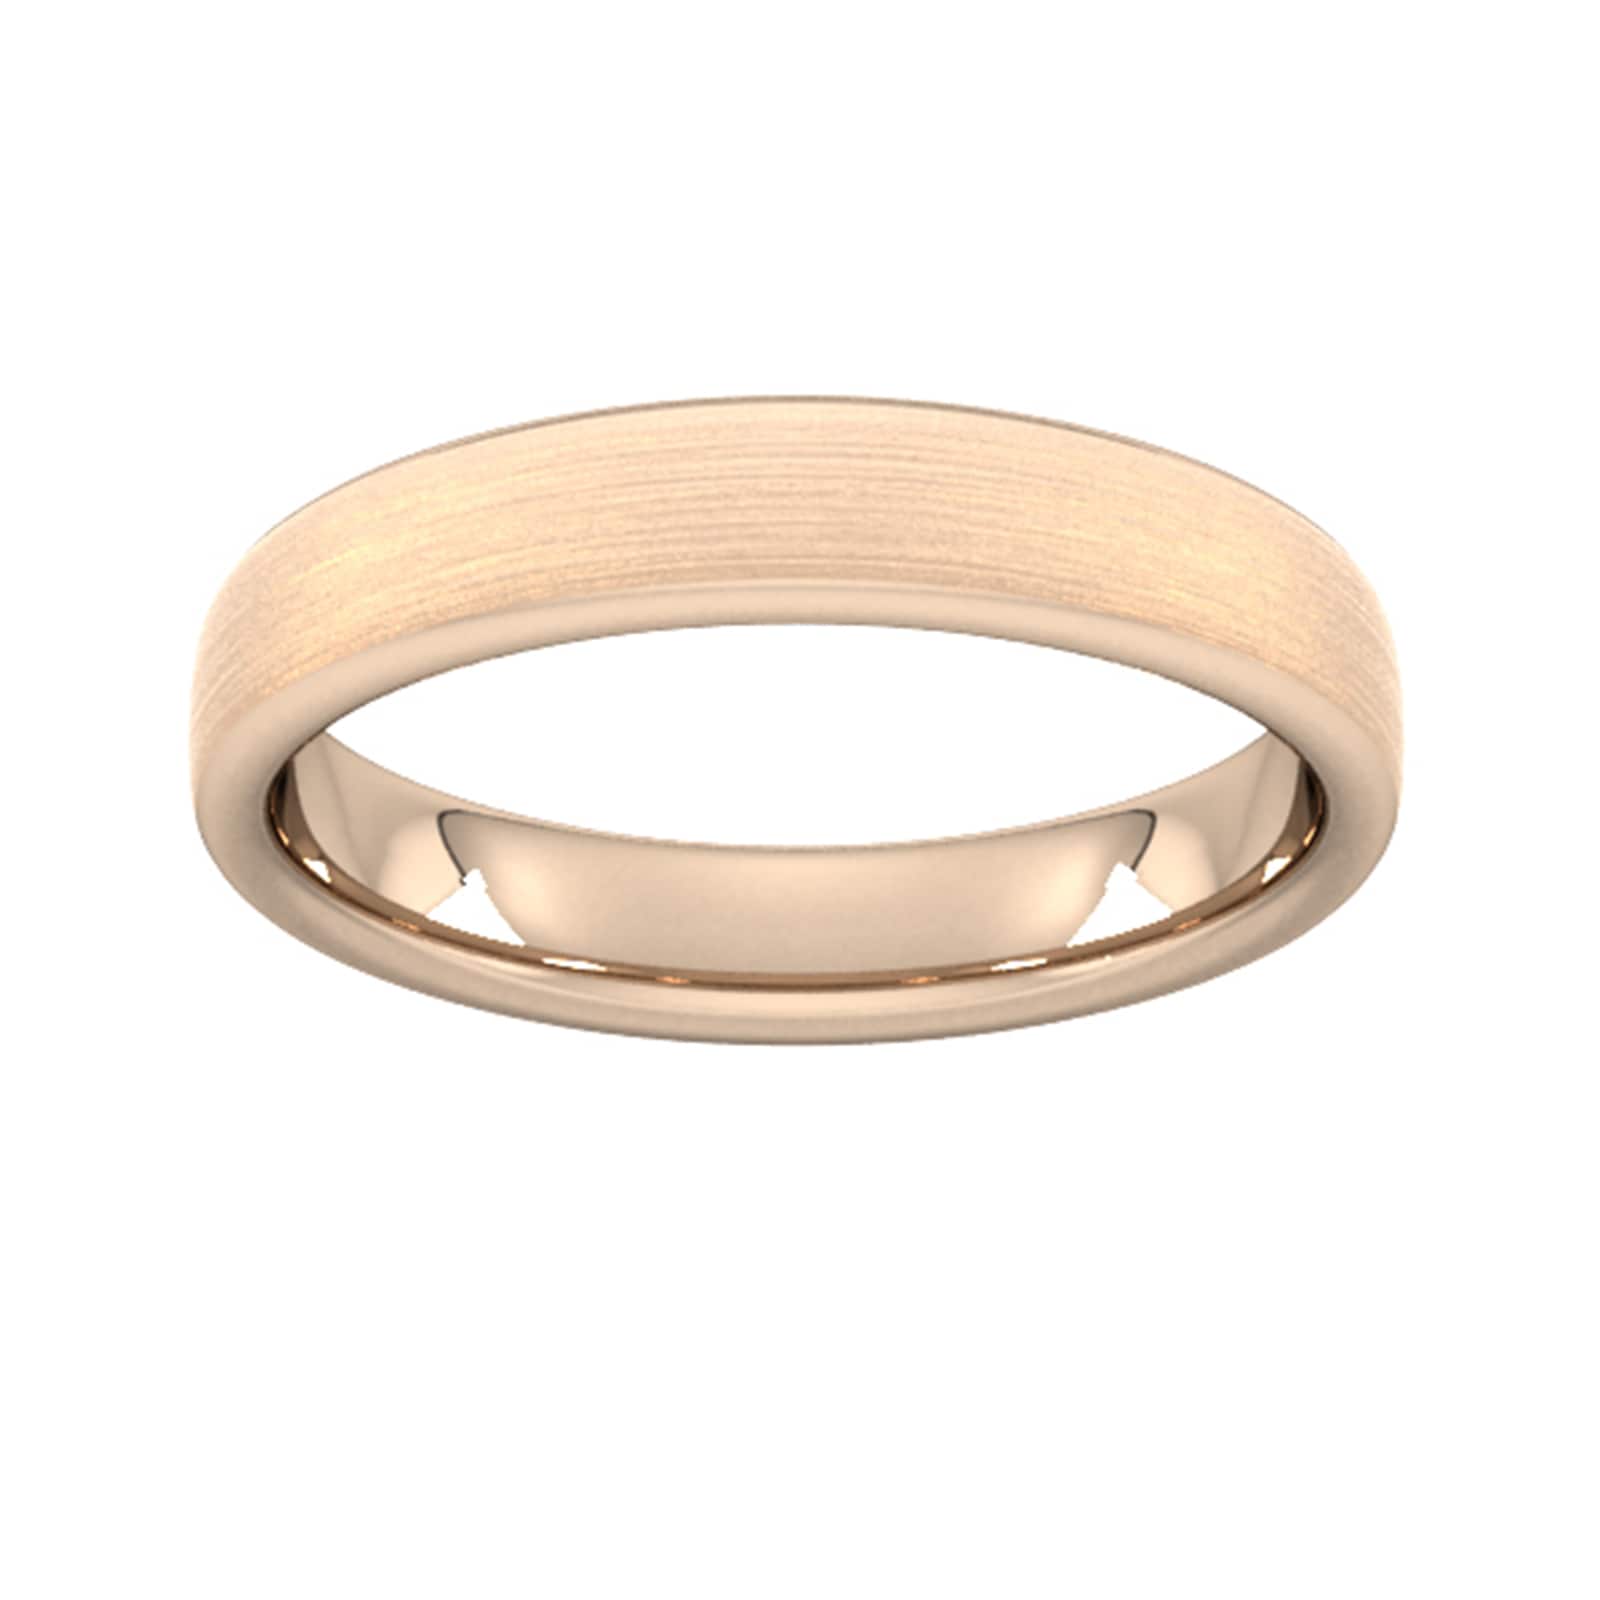 4mm Slight Court Extra Heavy Matt Finished Wedding Ring In 18 Carat Rose Gold - Ring Size L